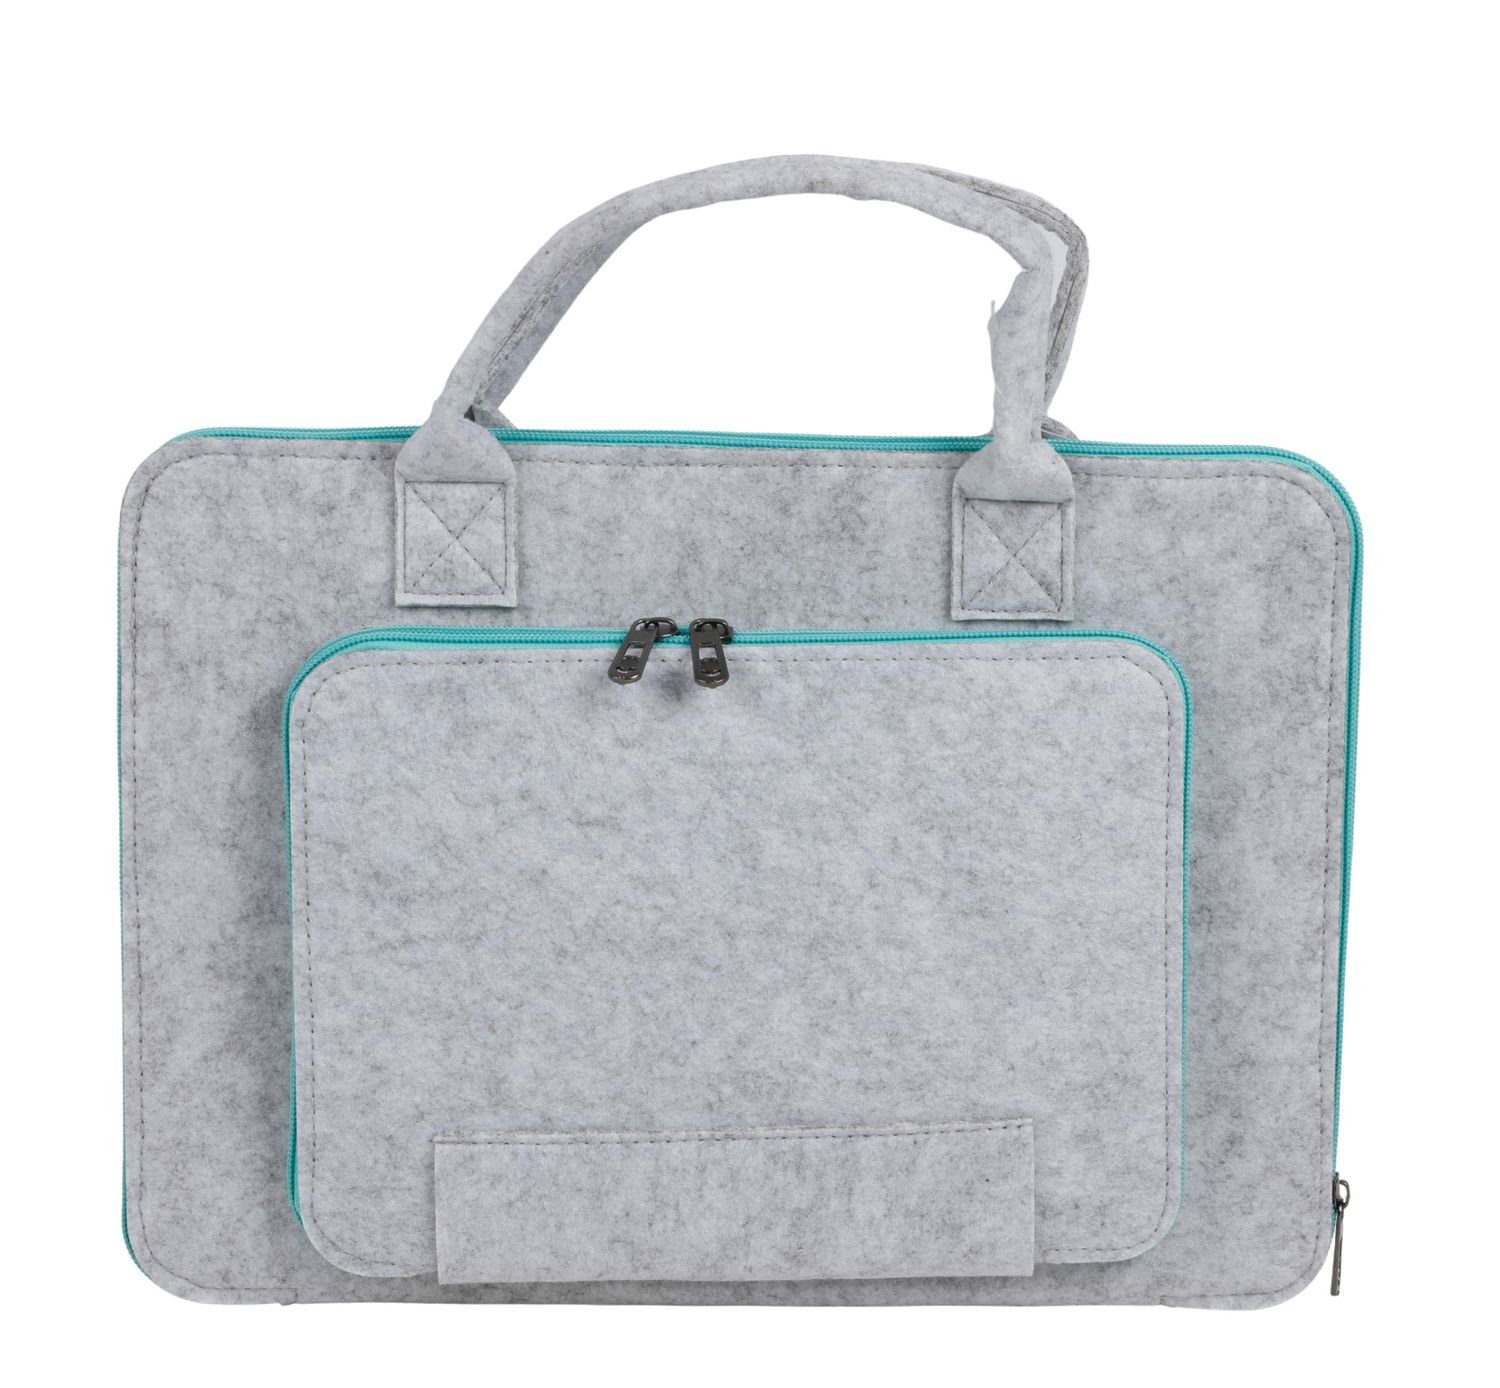 BURI Laptoptasche Laptop-Tasche aus Filz Notebooktasche Schutzhülle Aktentasche Grau